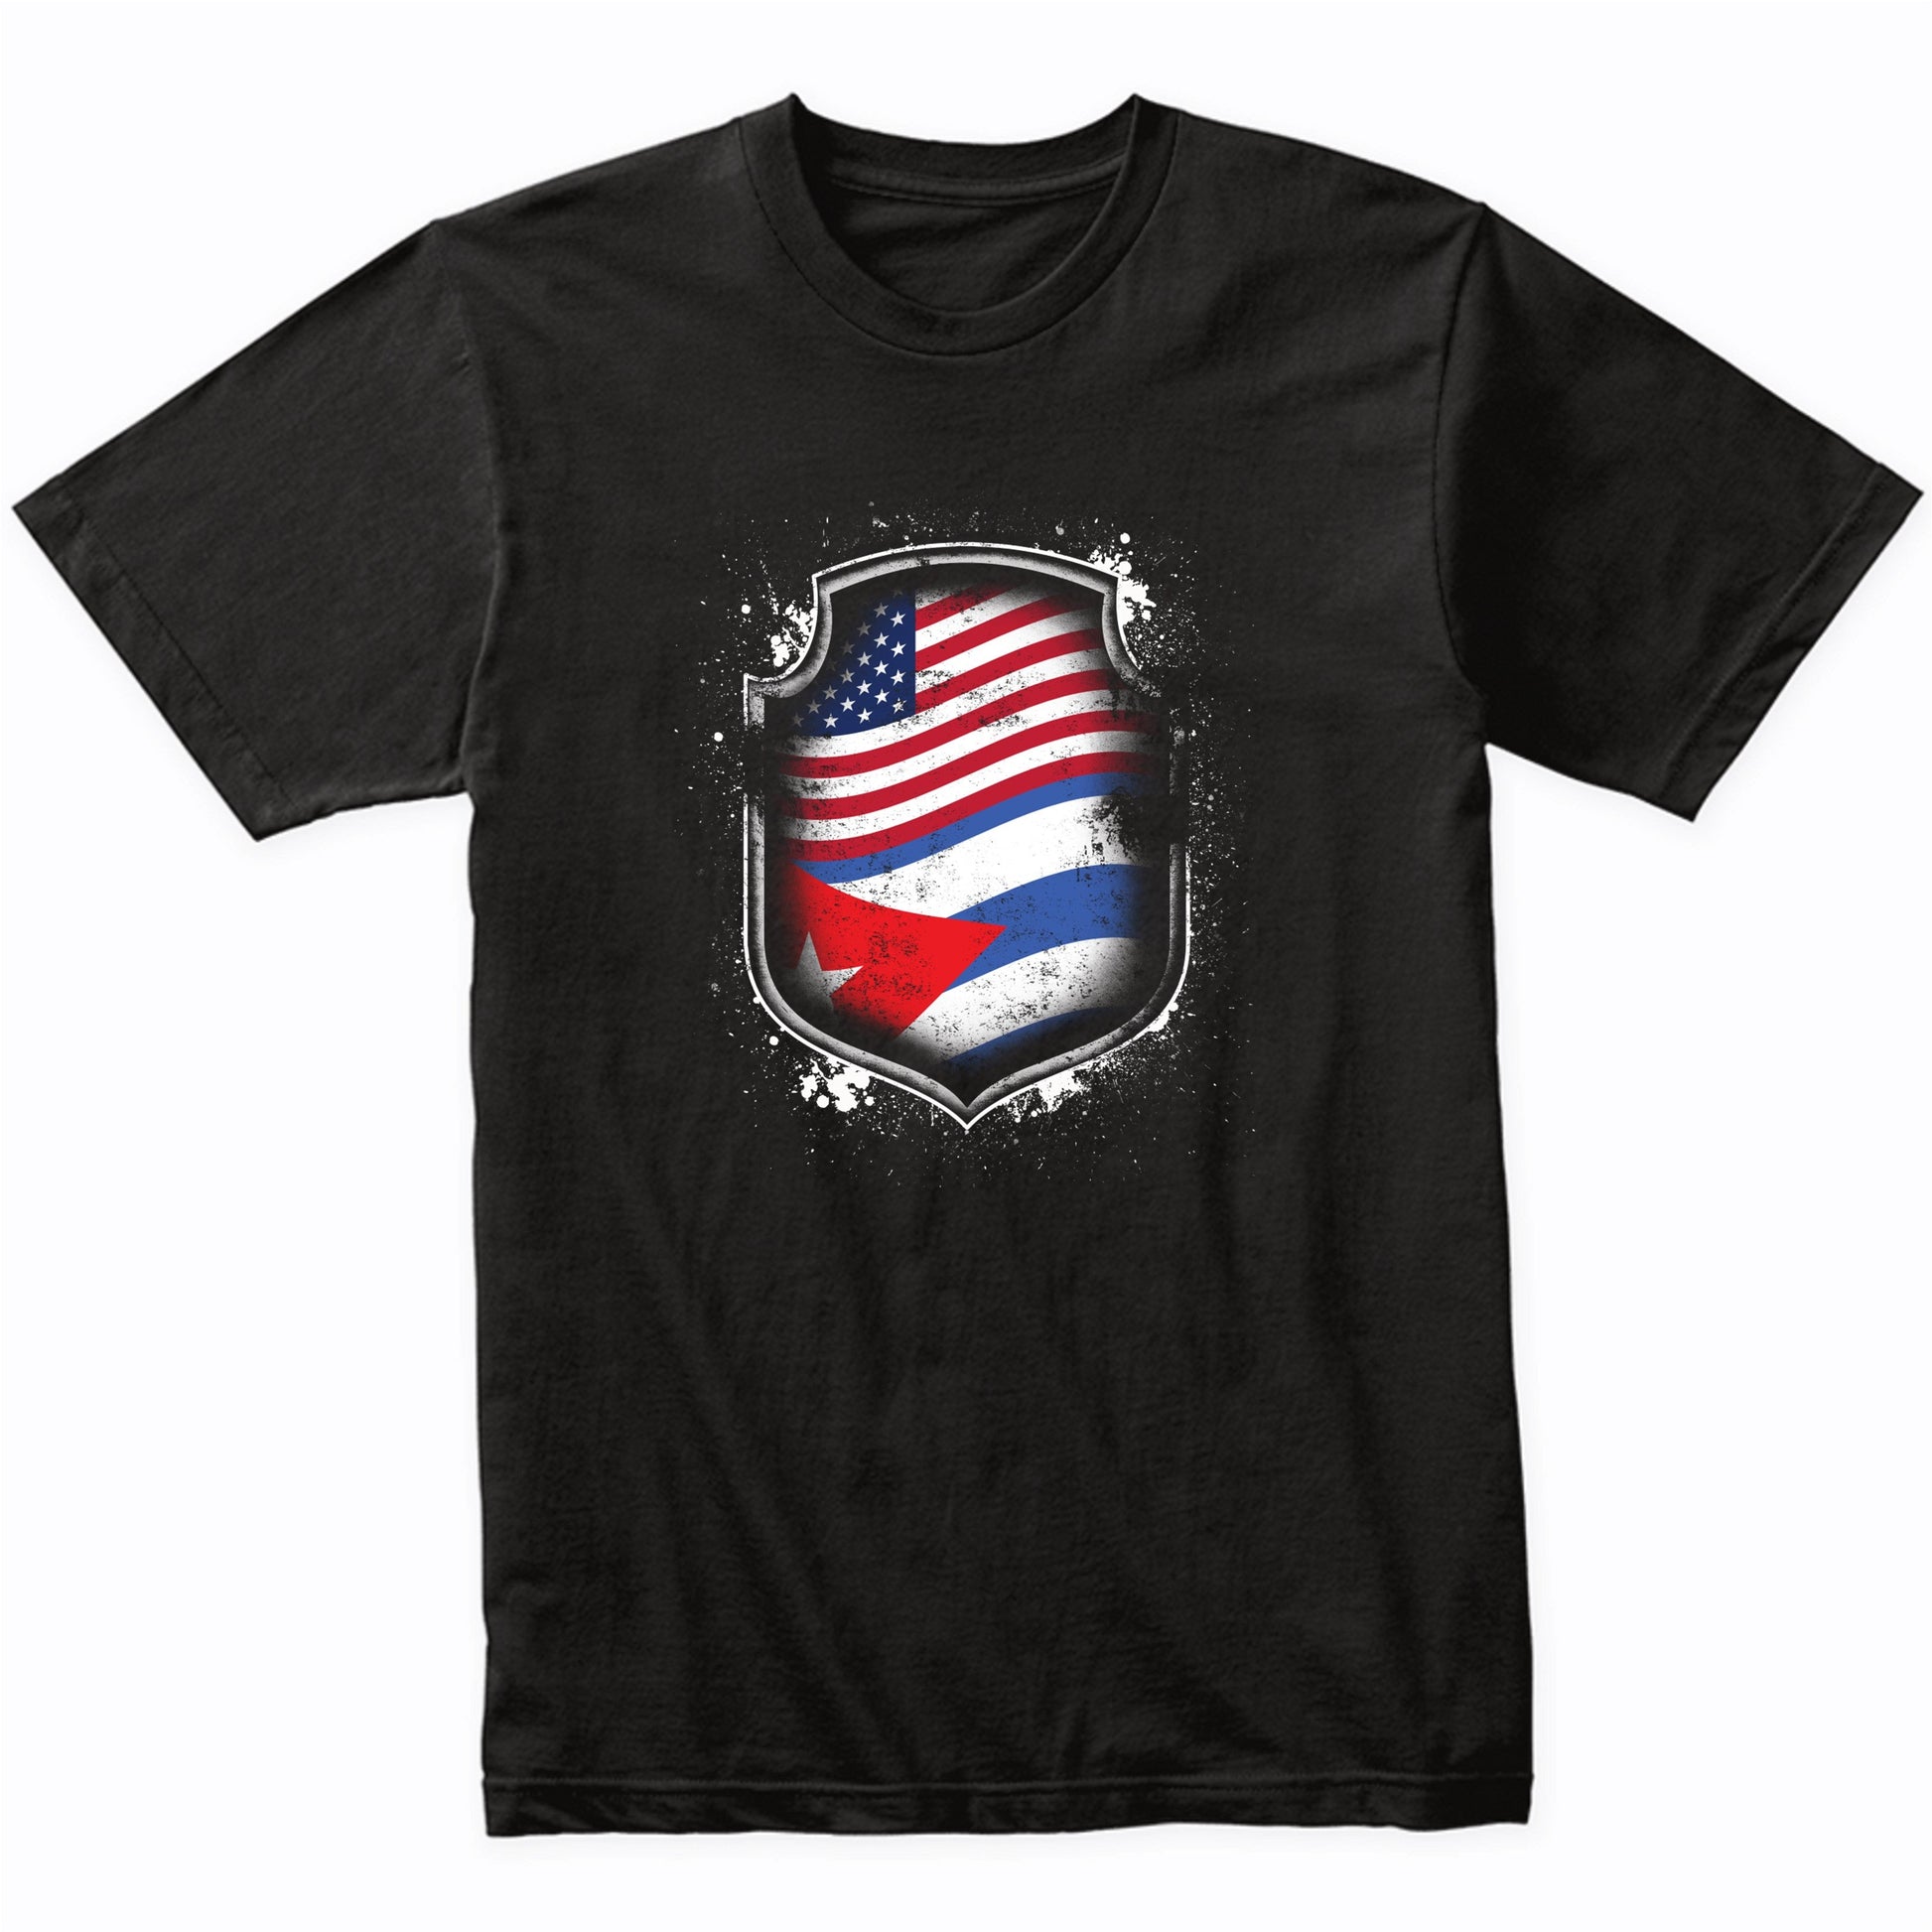 Cuban American Shirt Flags Of Cuba and America T-Shirt